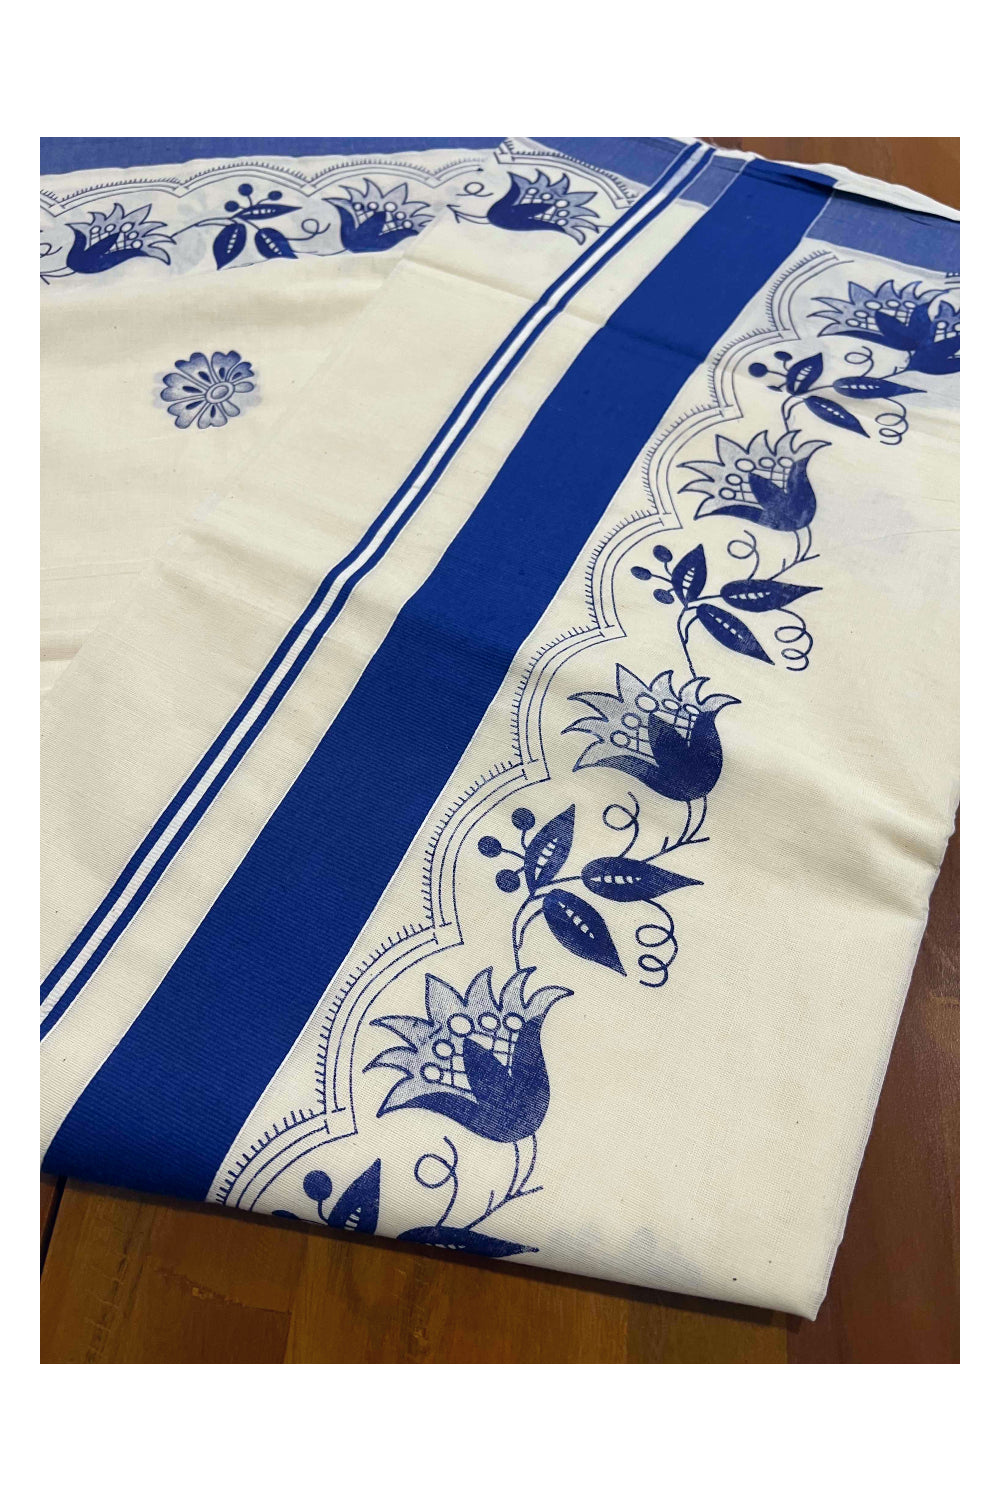 Pure Cotton Kerala Saree with Blue Floral Block Printed Border